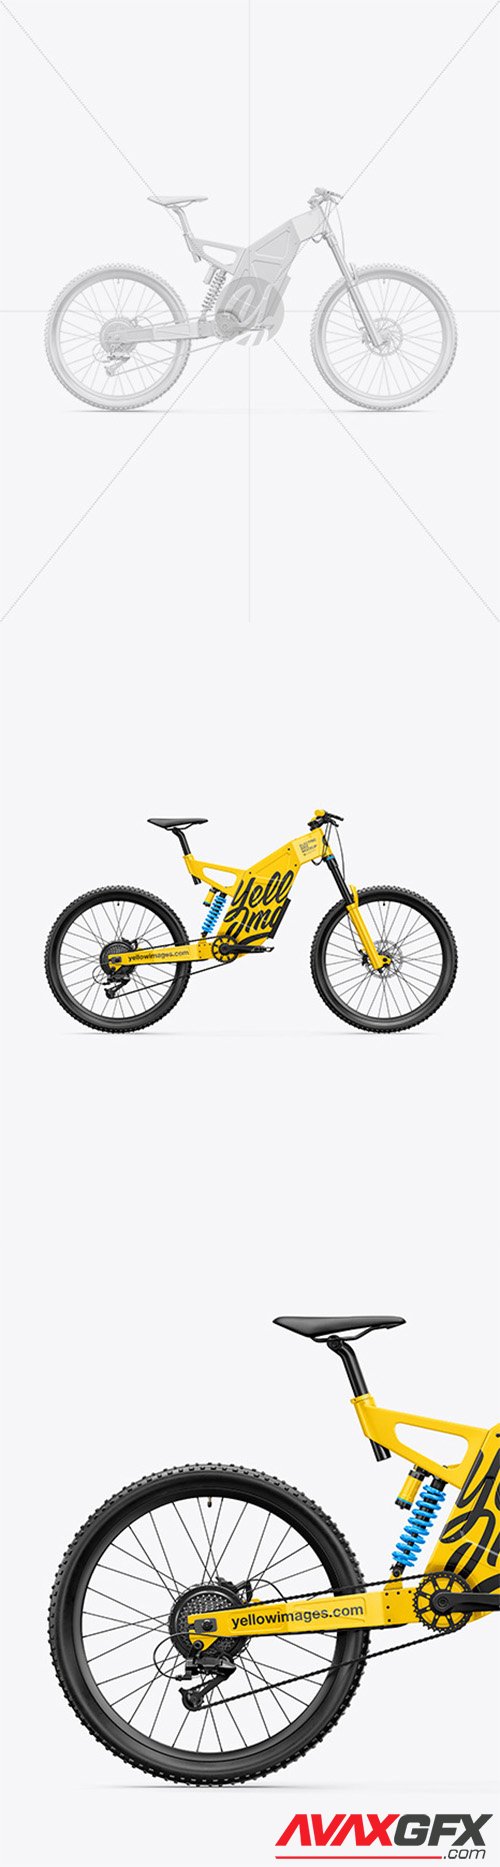 Download Yellowimages Mockups Quad Bike Mockup Back View Png PSD Mockup Templates